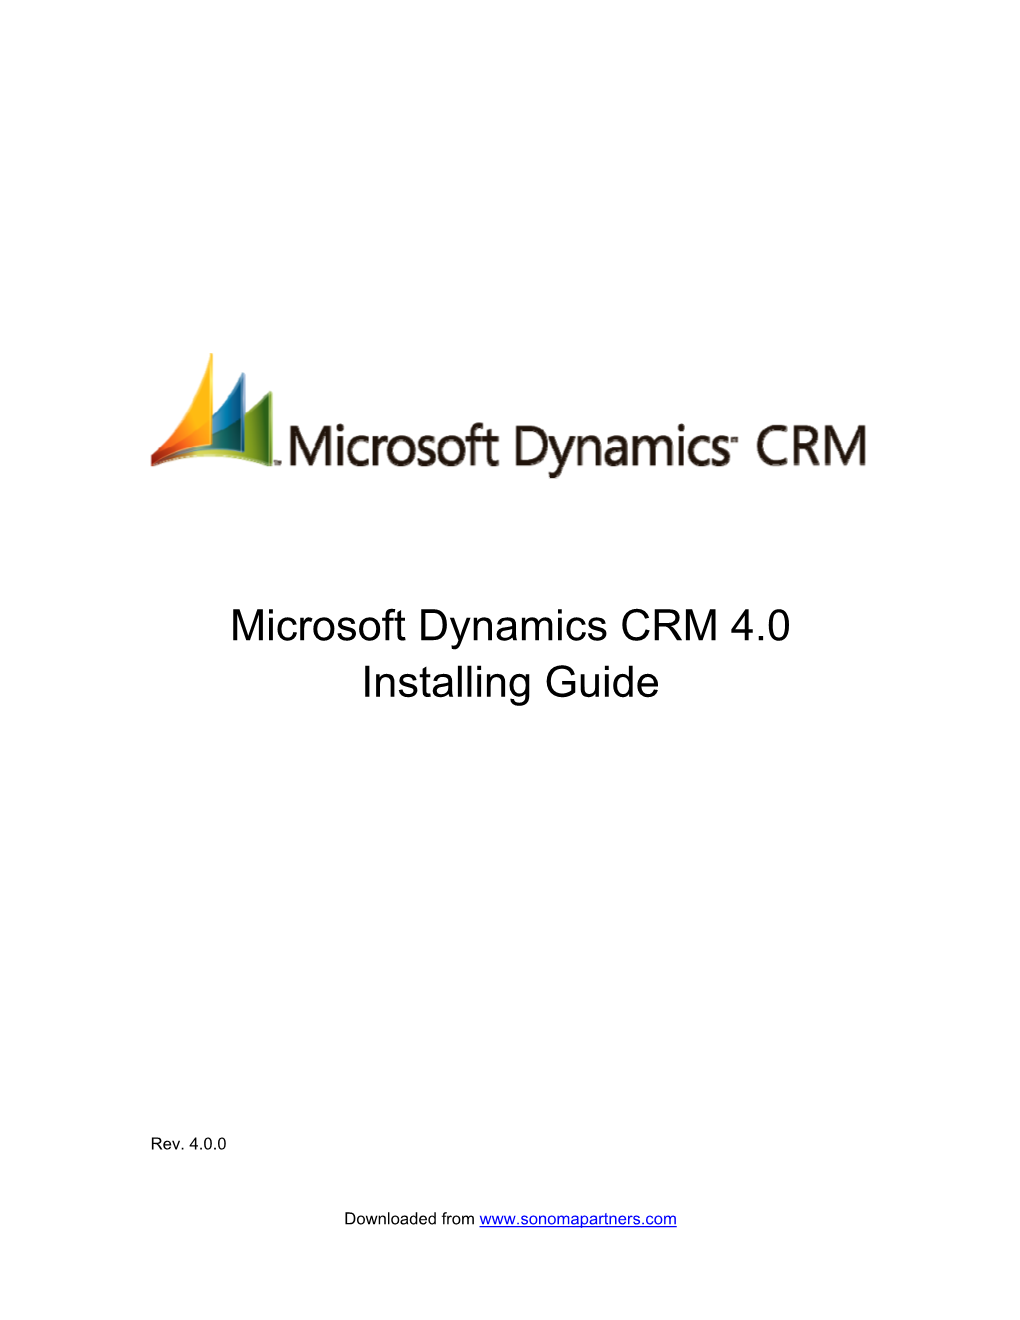 Microsoft Dynamics CRM 4.0 Installing Guide